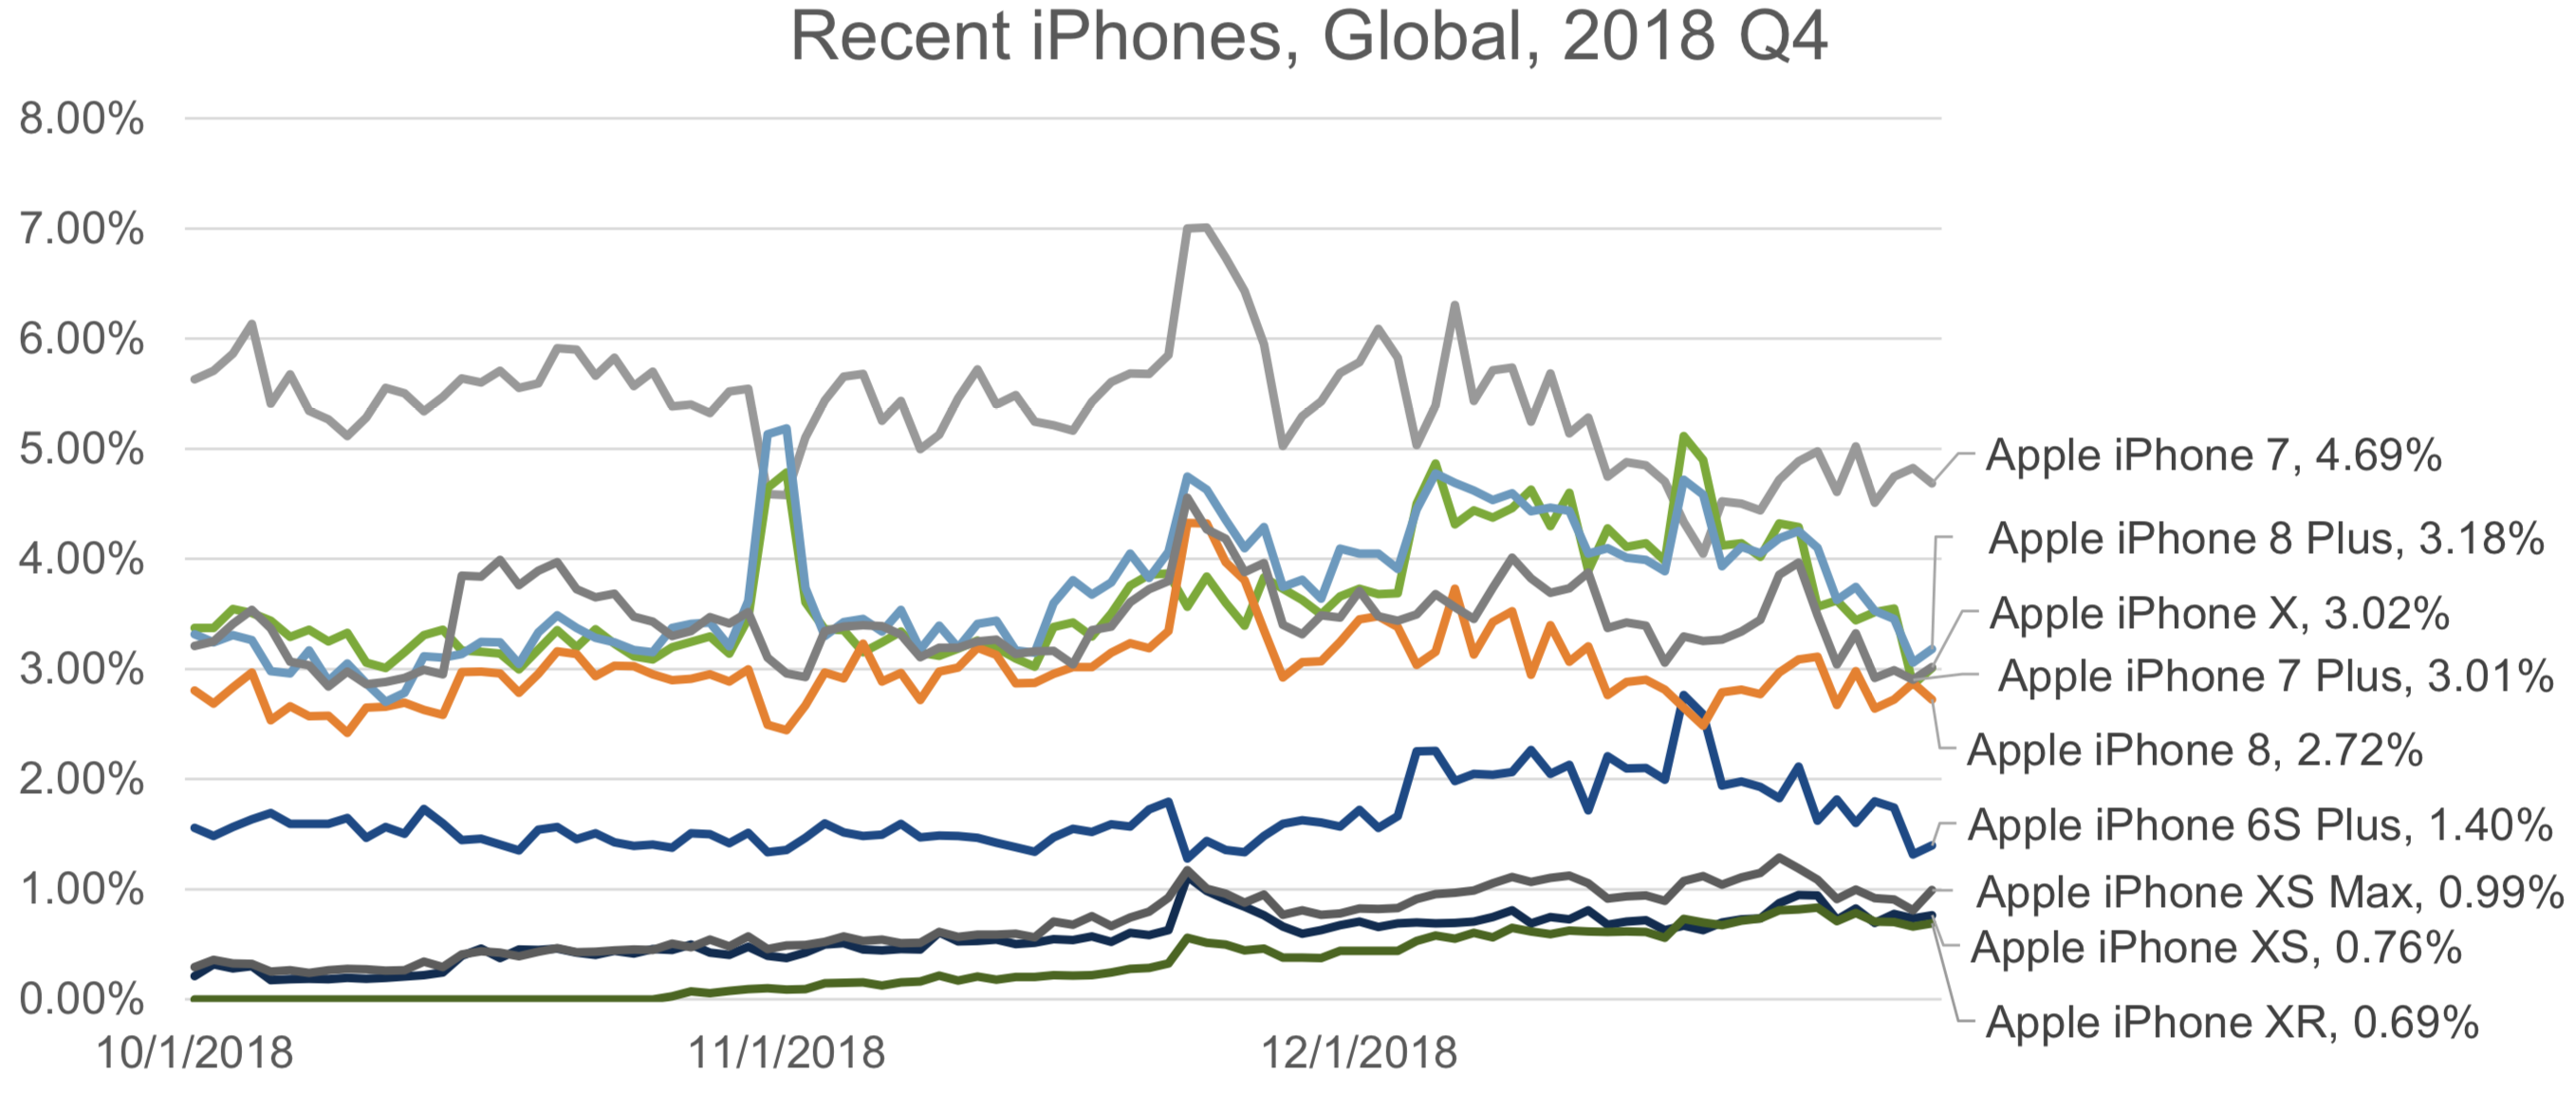 Top iPhones in Q4 / 2018